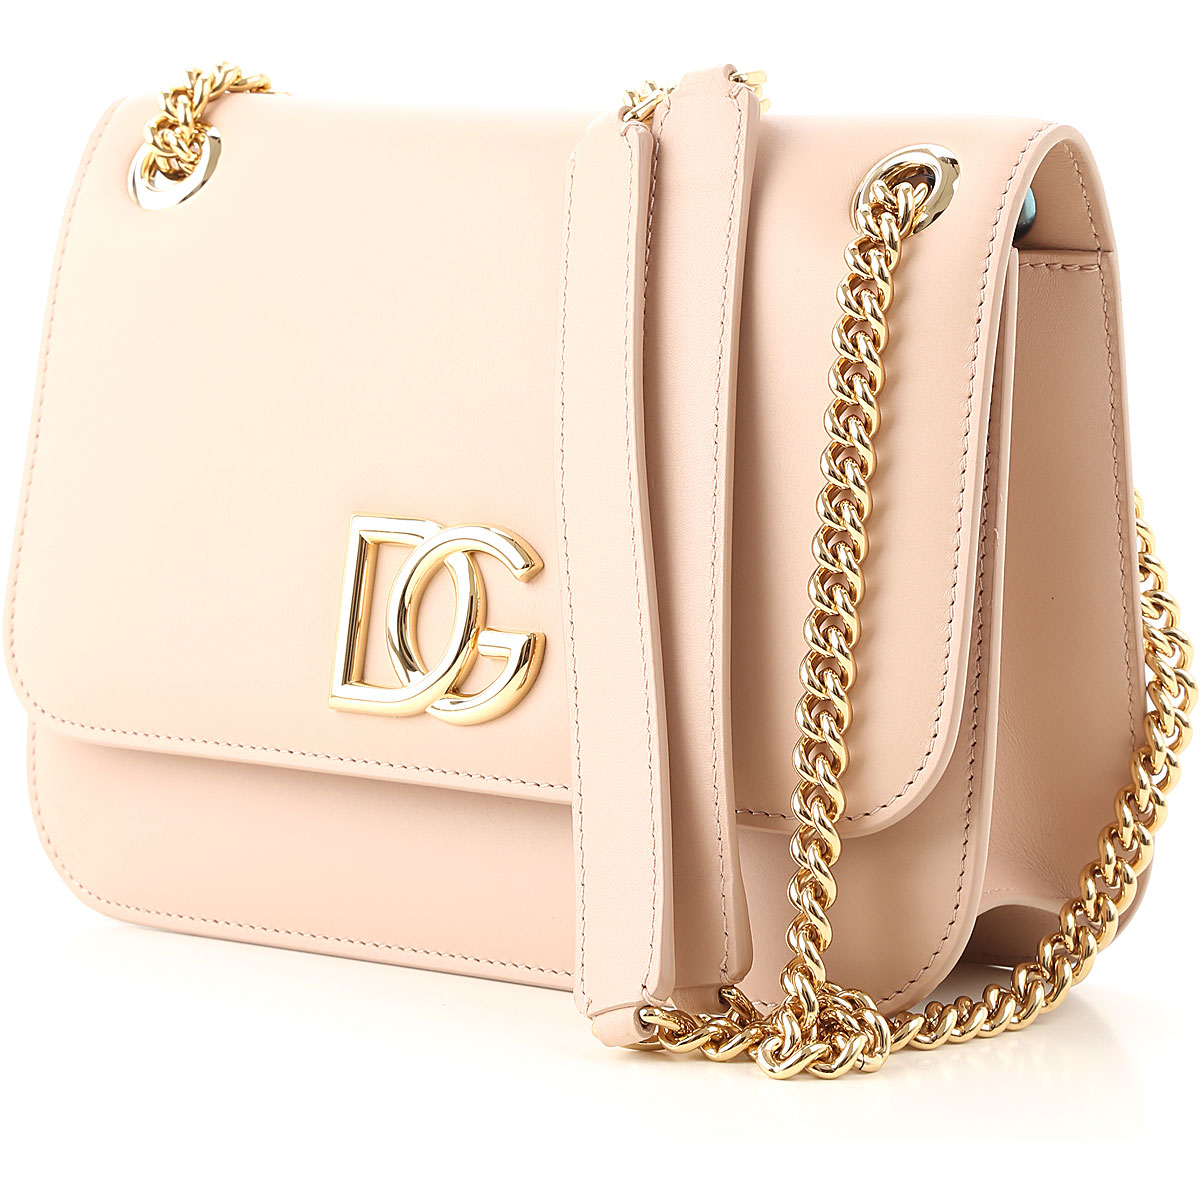 Handbags Dolce & Gabbana, Style code: bb6795-ax441-80412